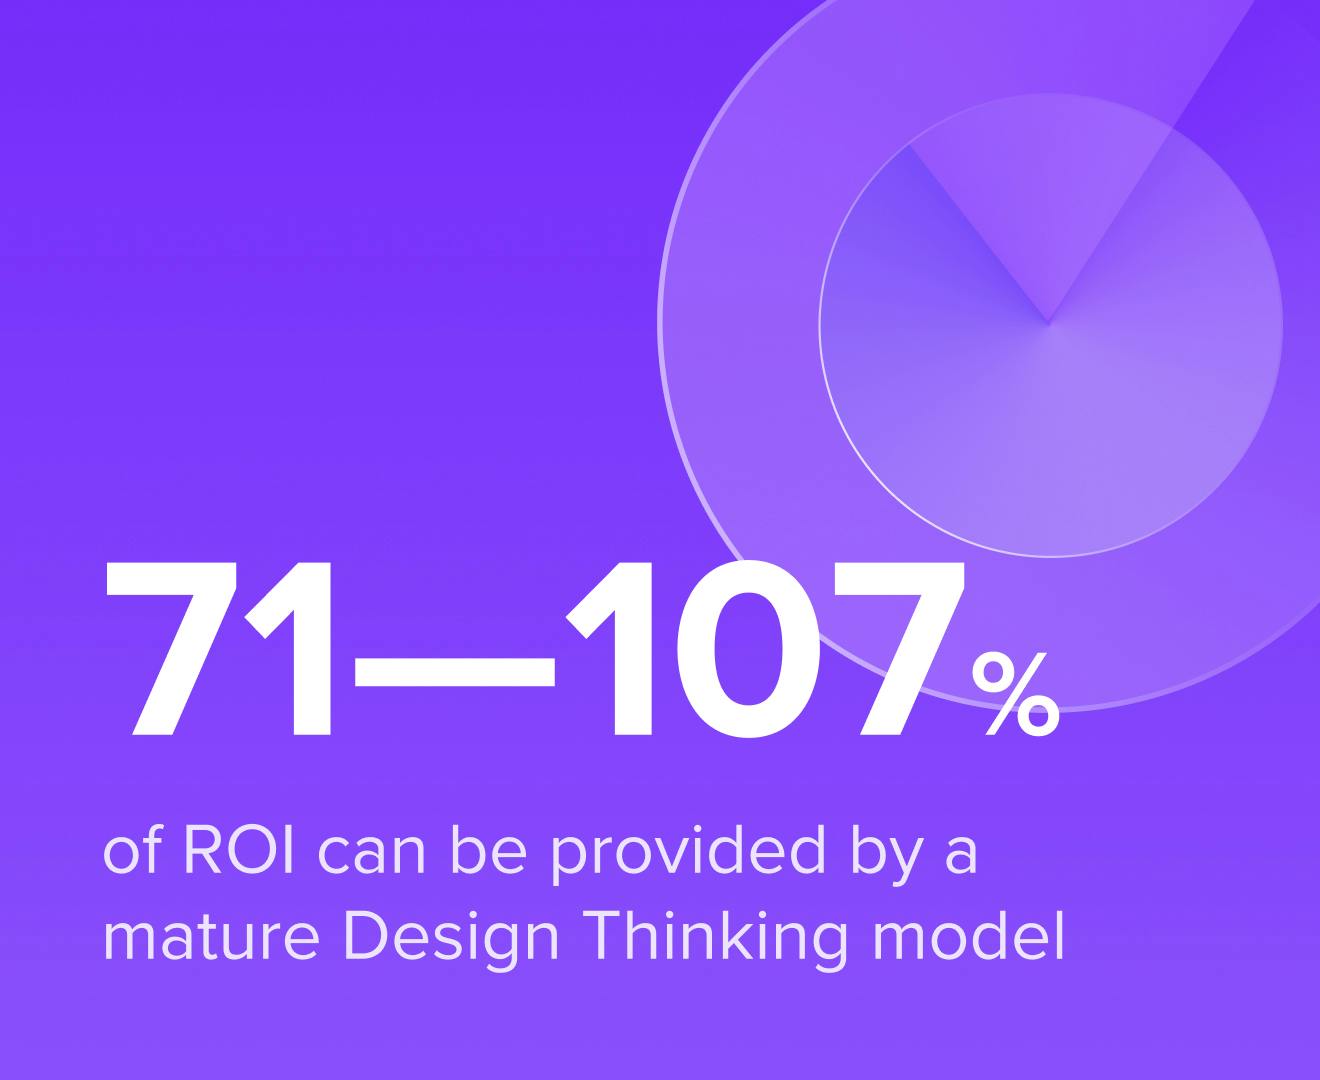 Design Thinking model